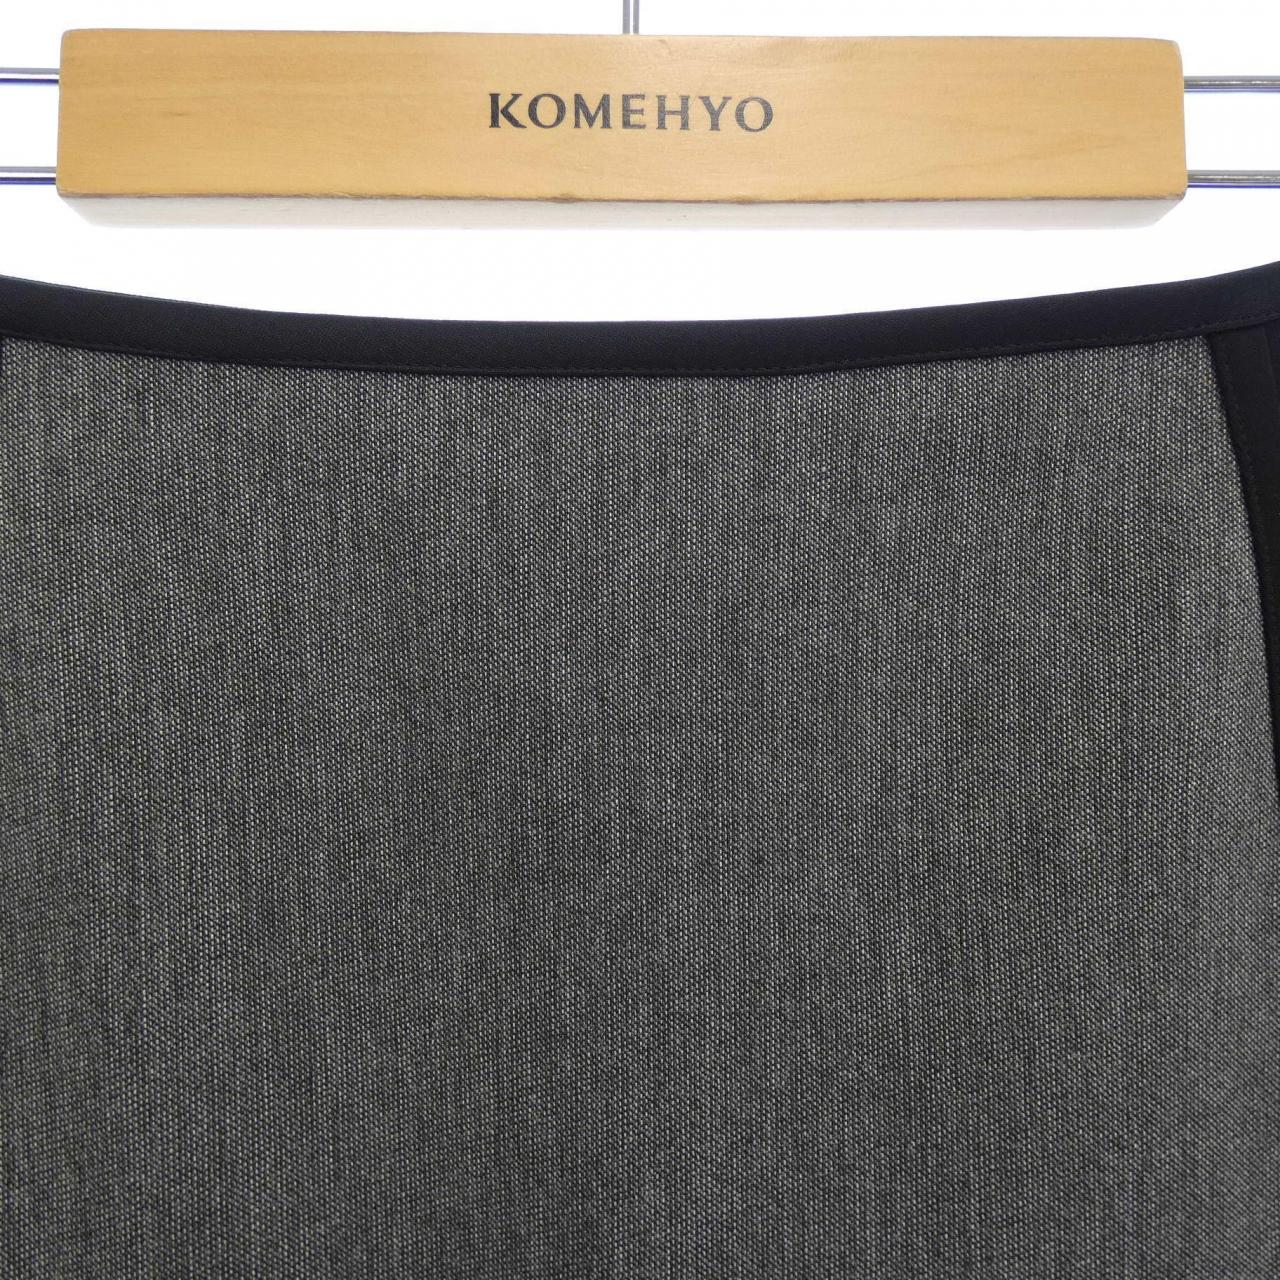 Donna Karan New York DKNY skirt